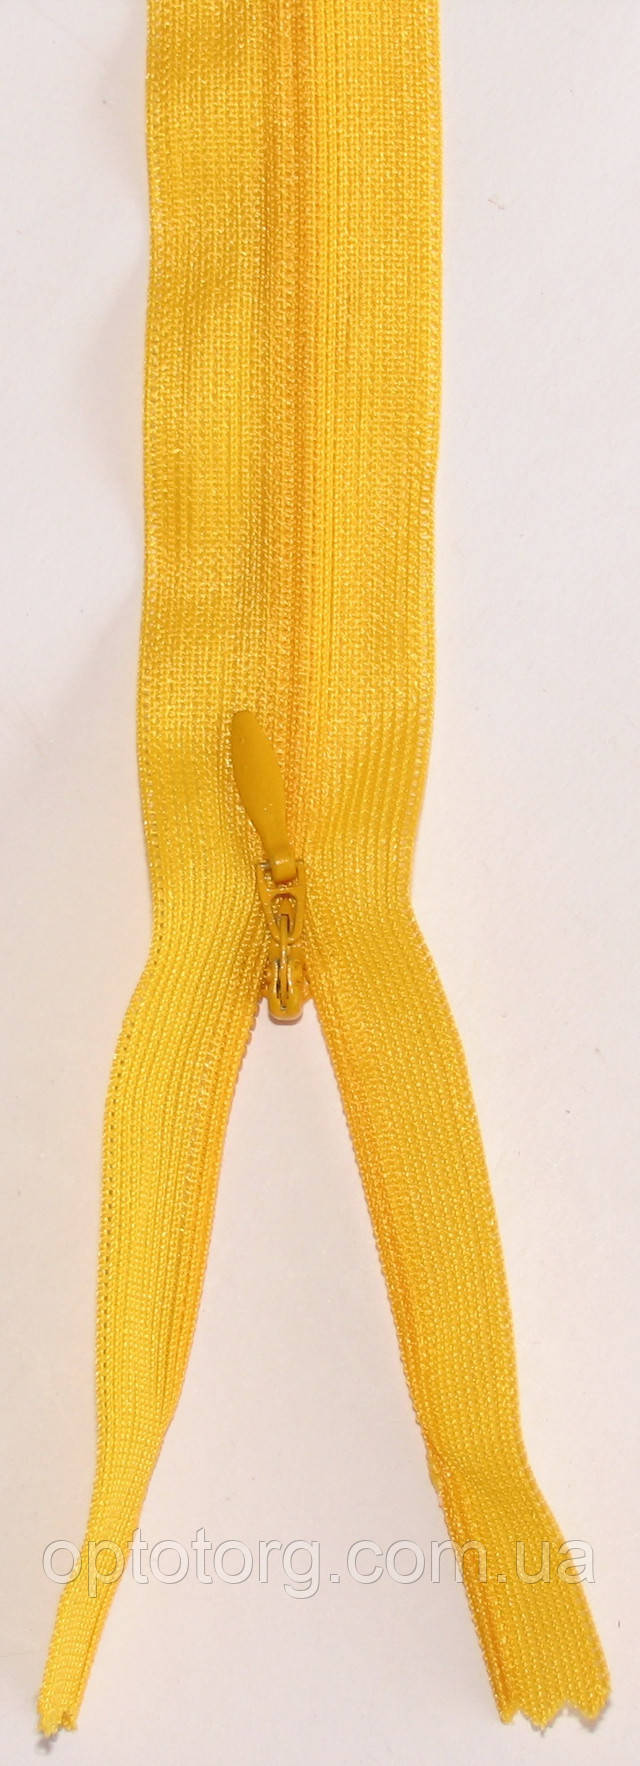 Потайна нераз'емна блискавка кольору жовток одинарна довжина 50см оптом від optotorg.com.ua